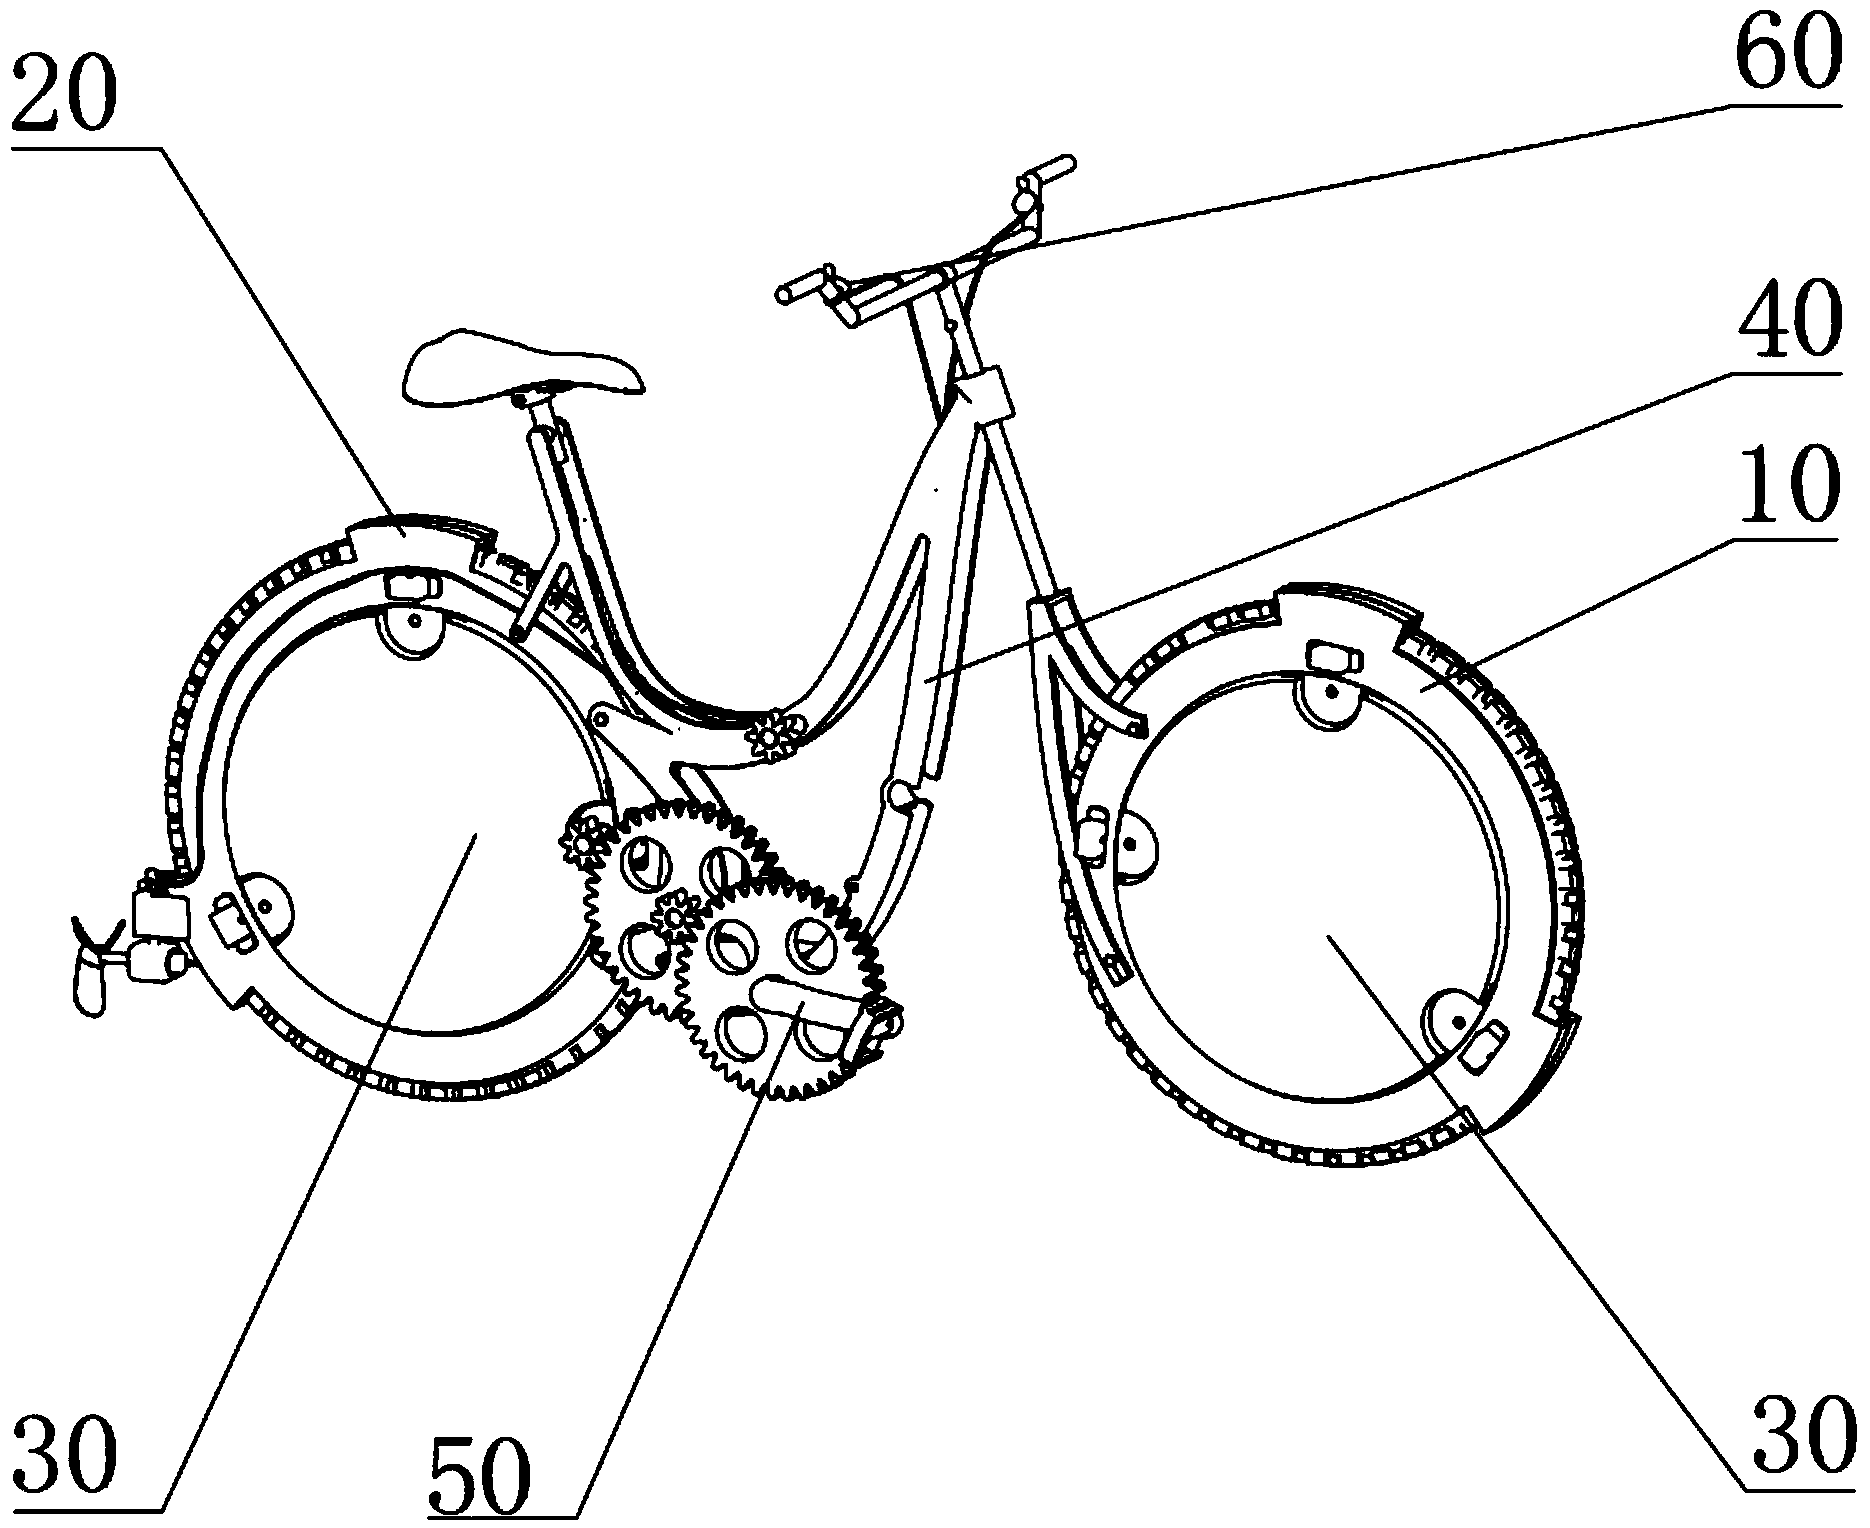 Amphibian bicycle